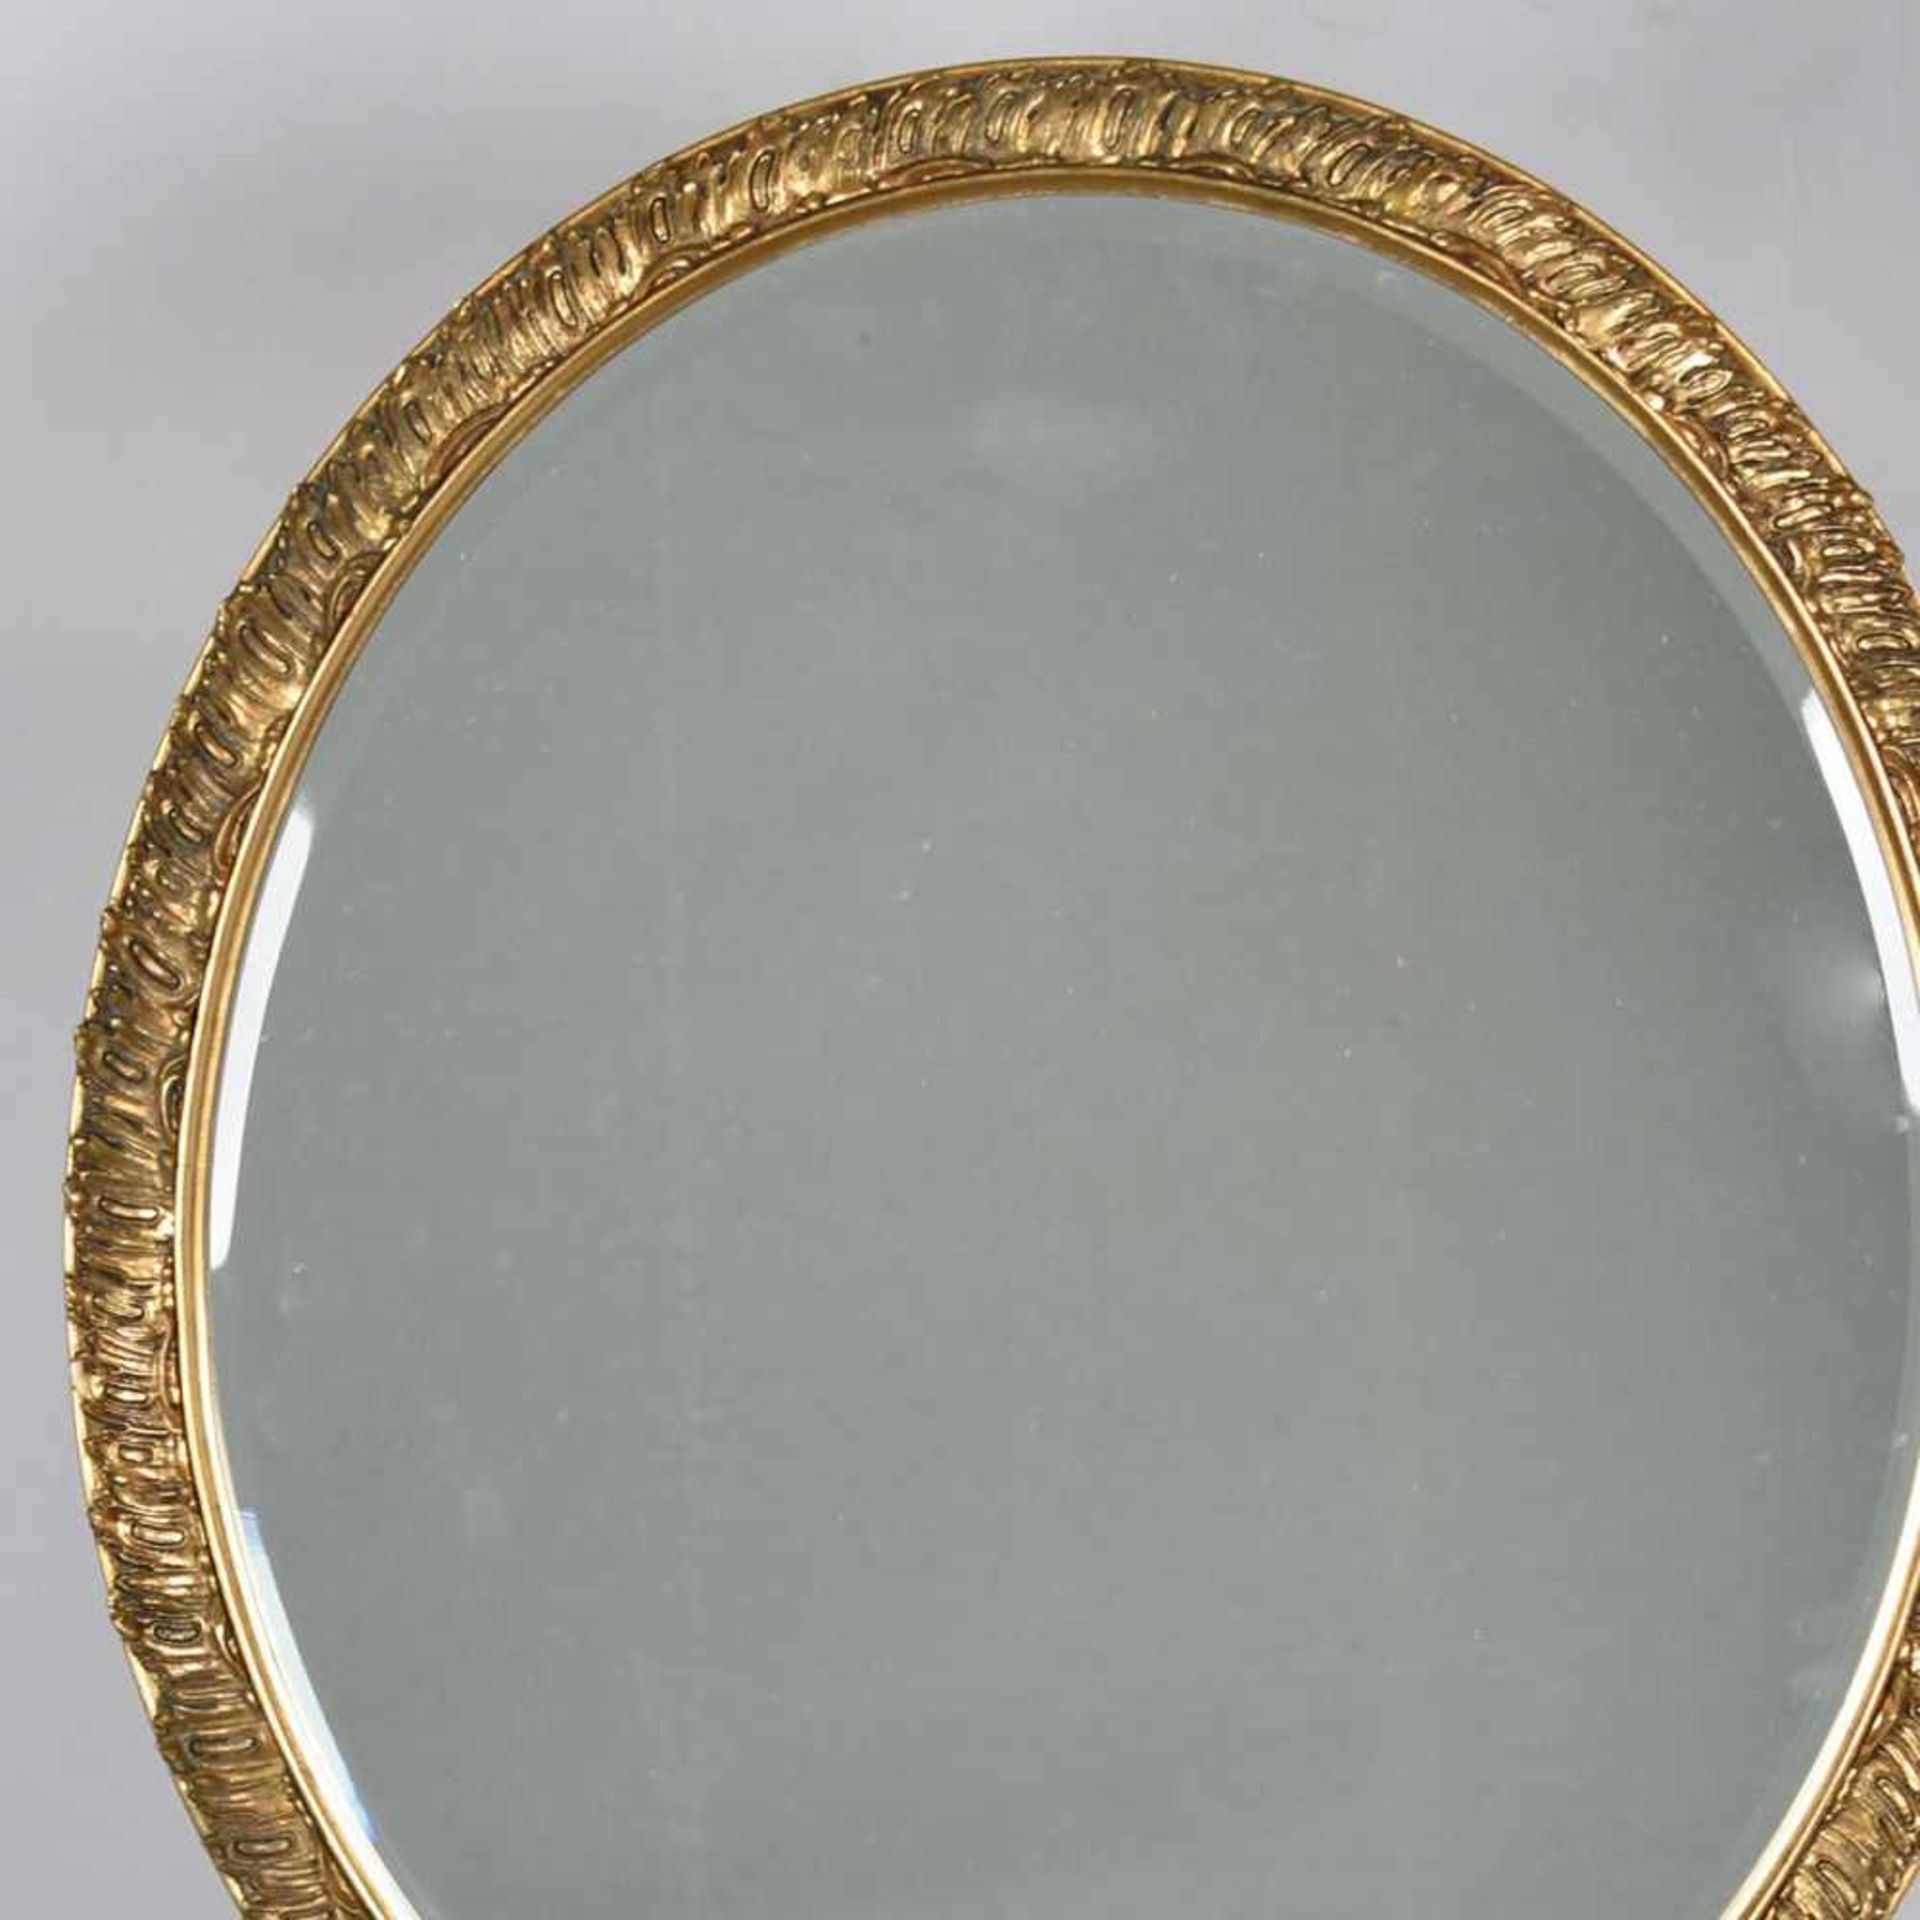 Wandspiegel ovale facettierte Spiegelfläche in goldfarbener Rocaillenrahmung, ca. 66,5 x 56,5 cm,